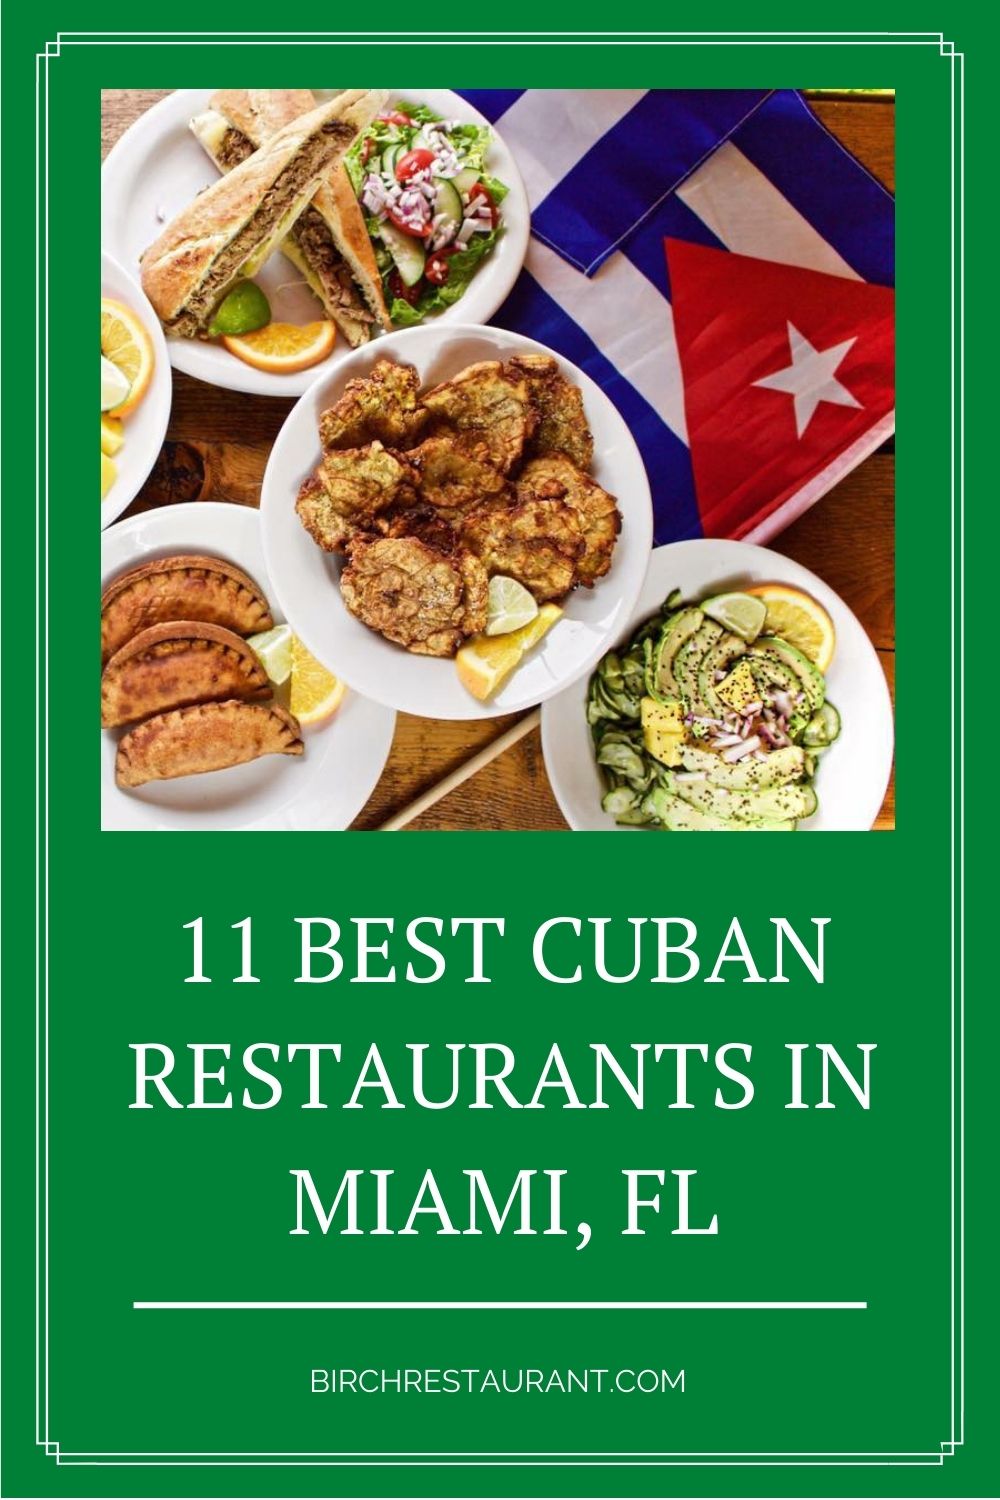 Best Cuban Restaurants in Miami